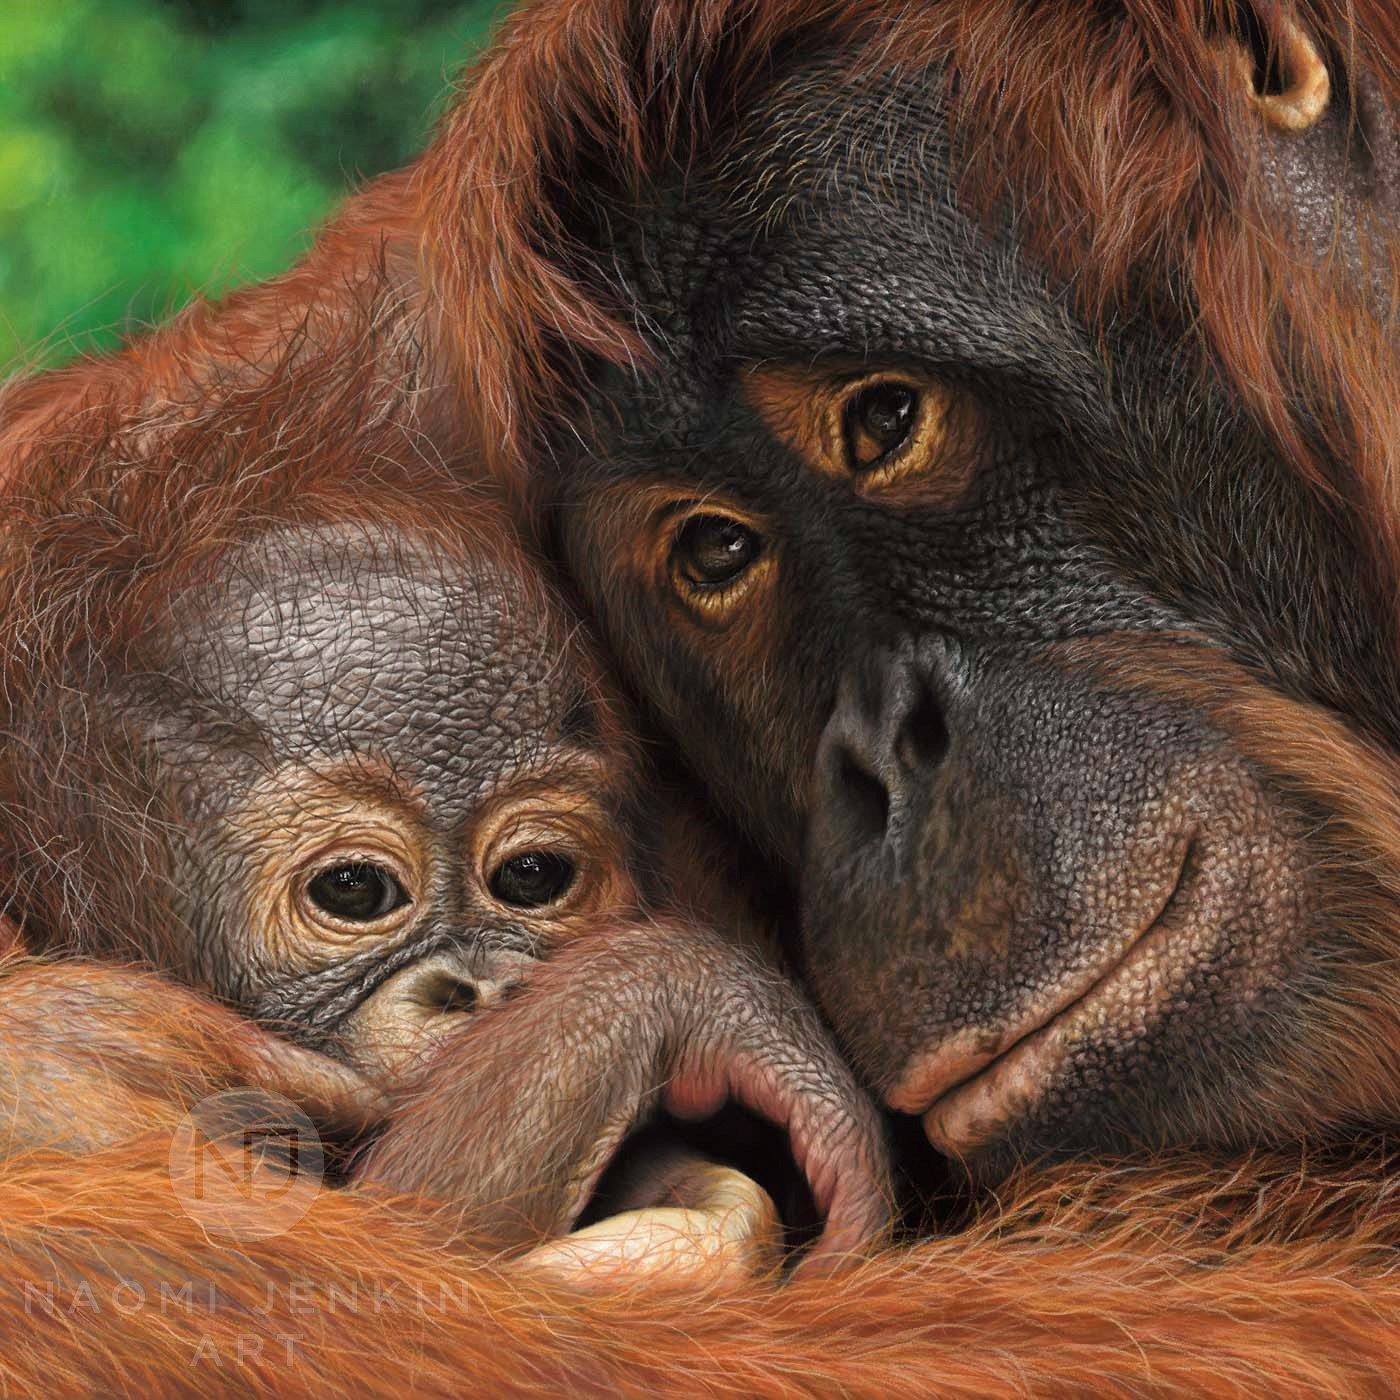 Orangutan art by wildlife artist Naomi Jenkin.